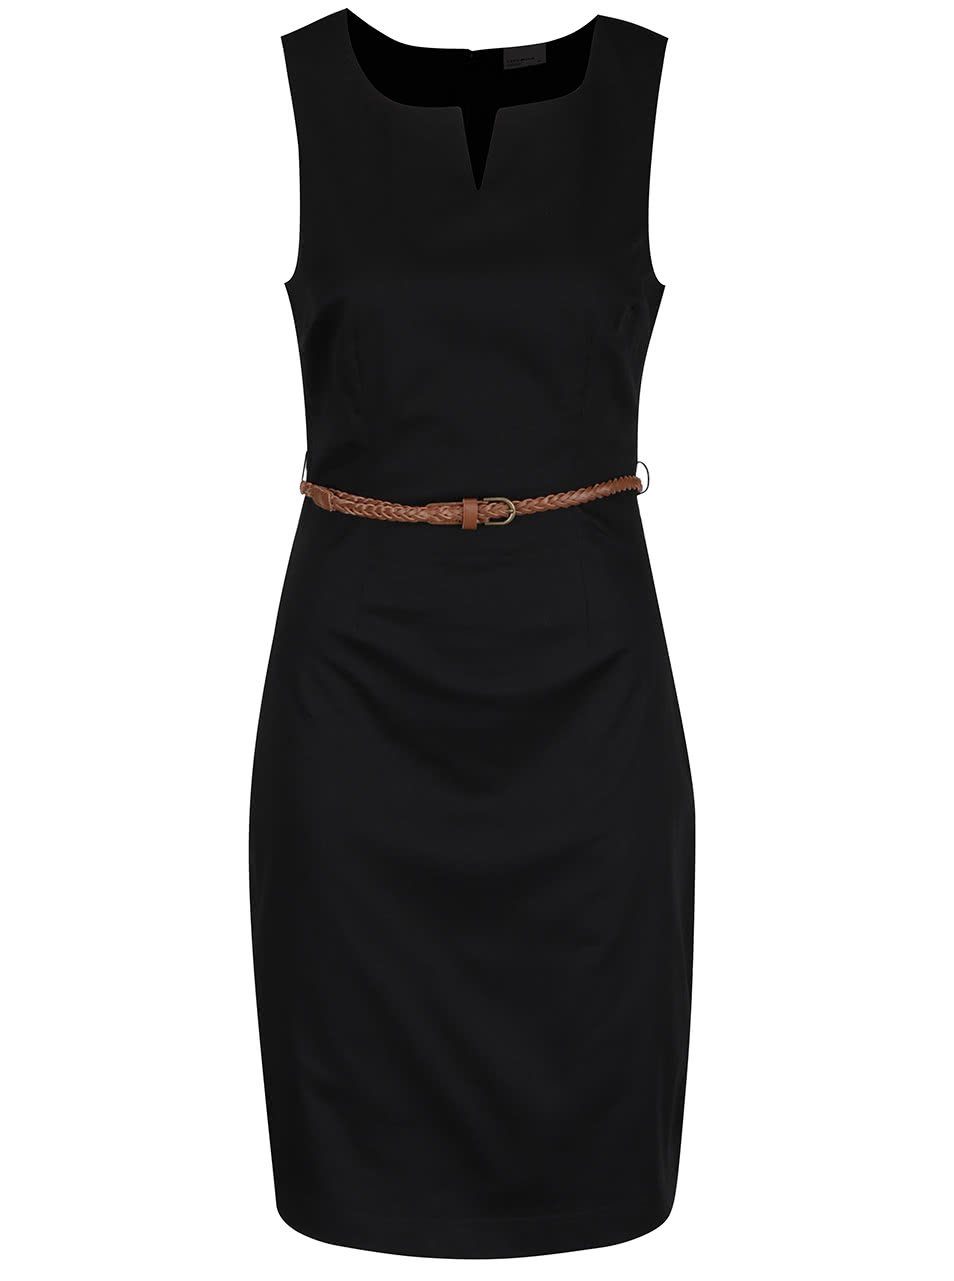 Černé šaty s páskem Vero Moda Pekaya